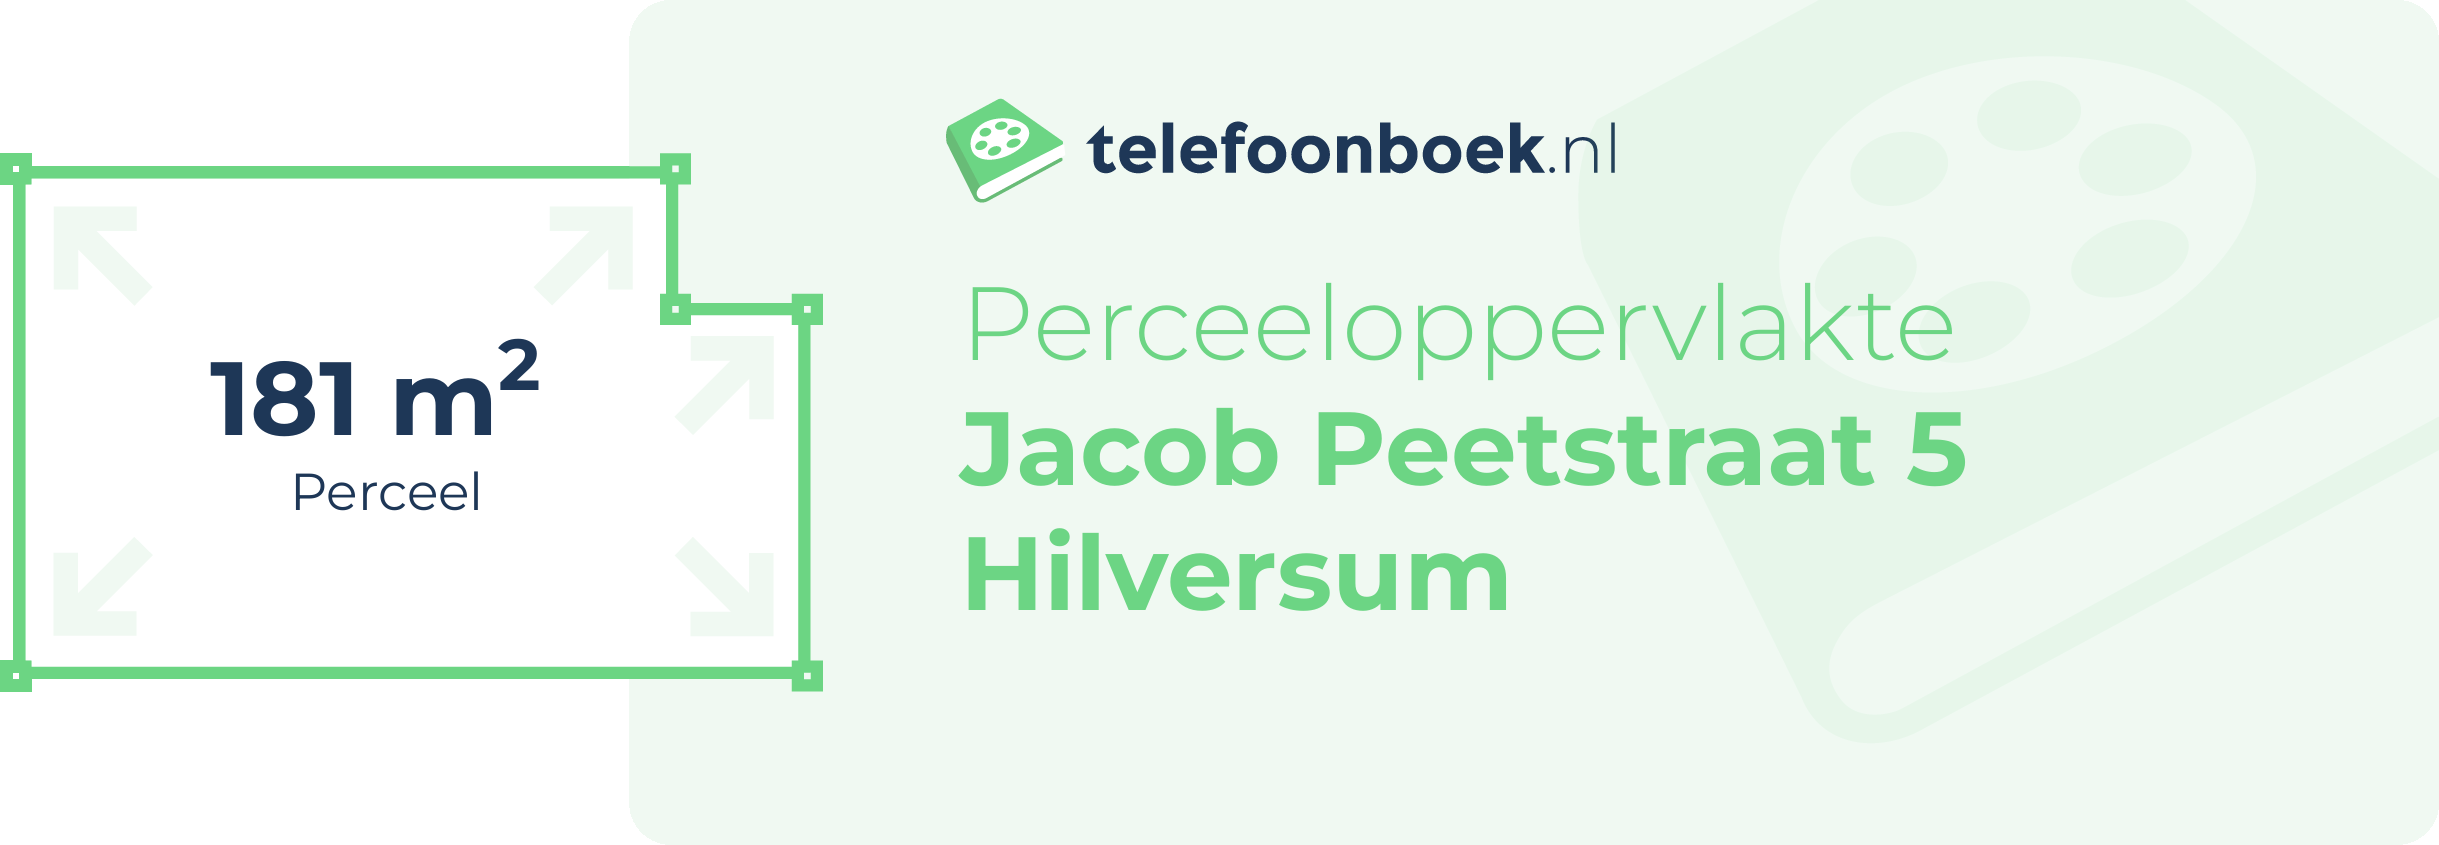 Perceeloppervlakte Jacob Peetstraat 5 Hilversum